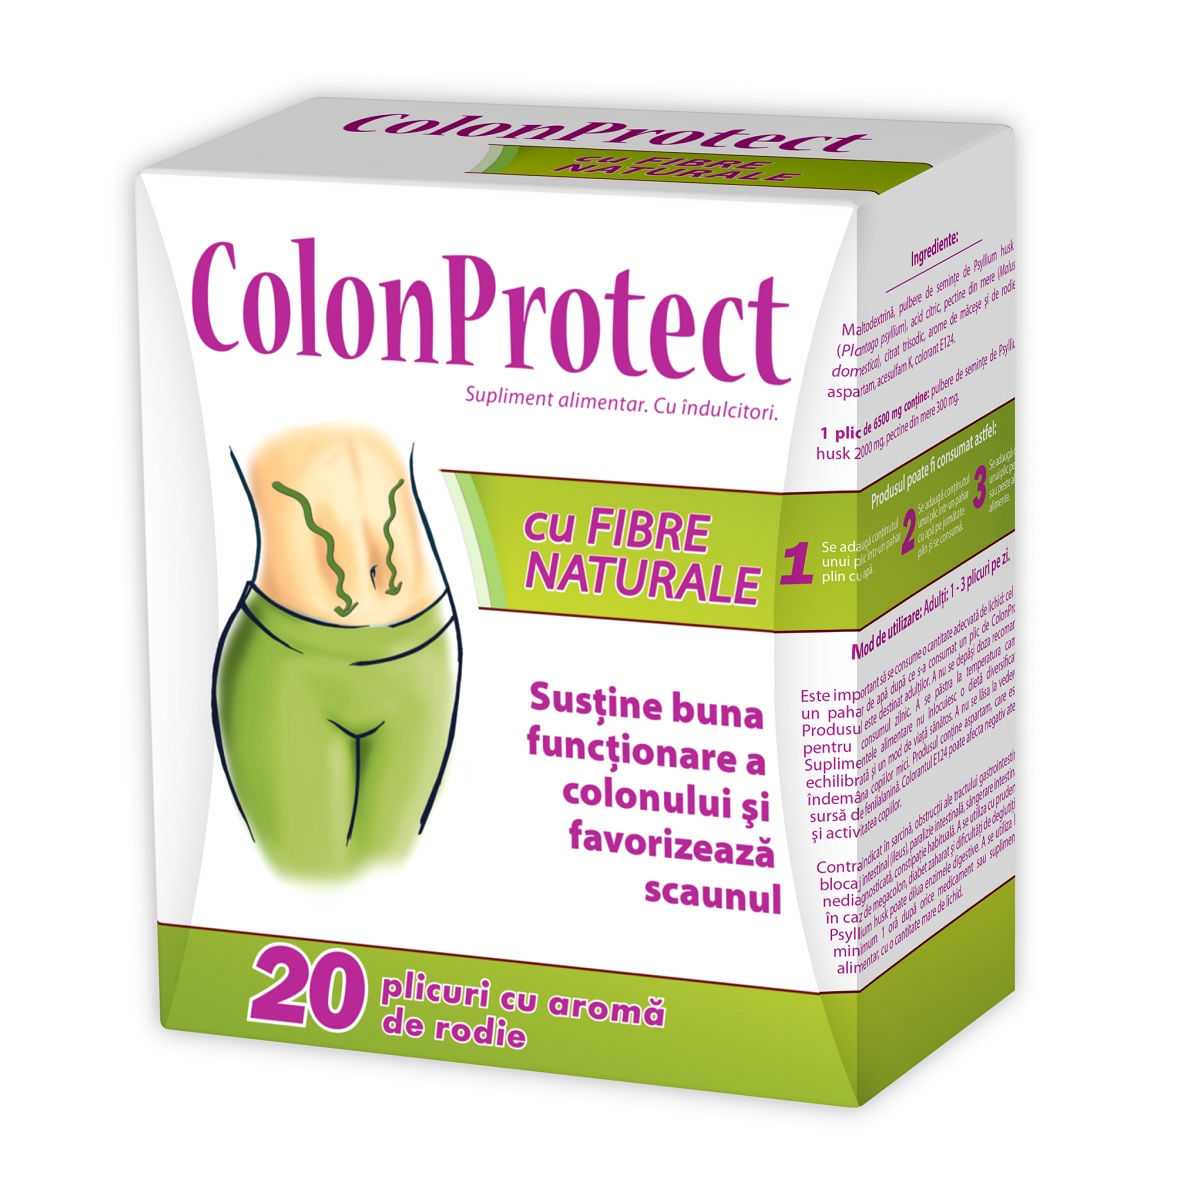 Colon Protect cu fibre naturale și gust de rodie, 20 plicuri, Zdrovit